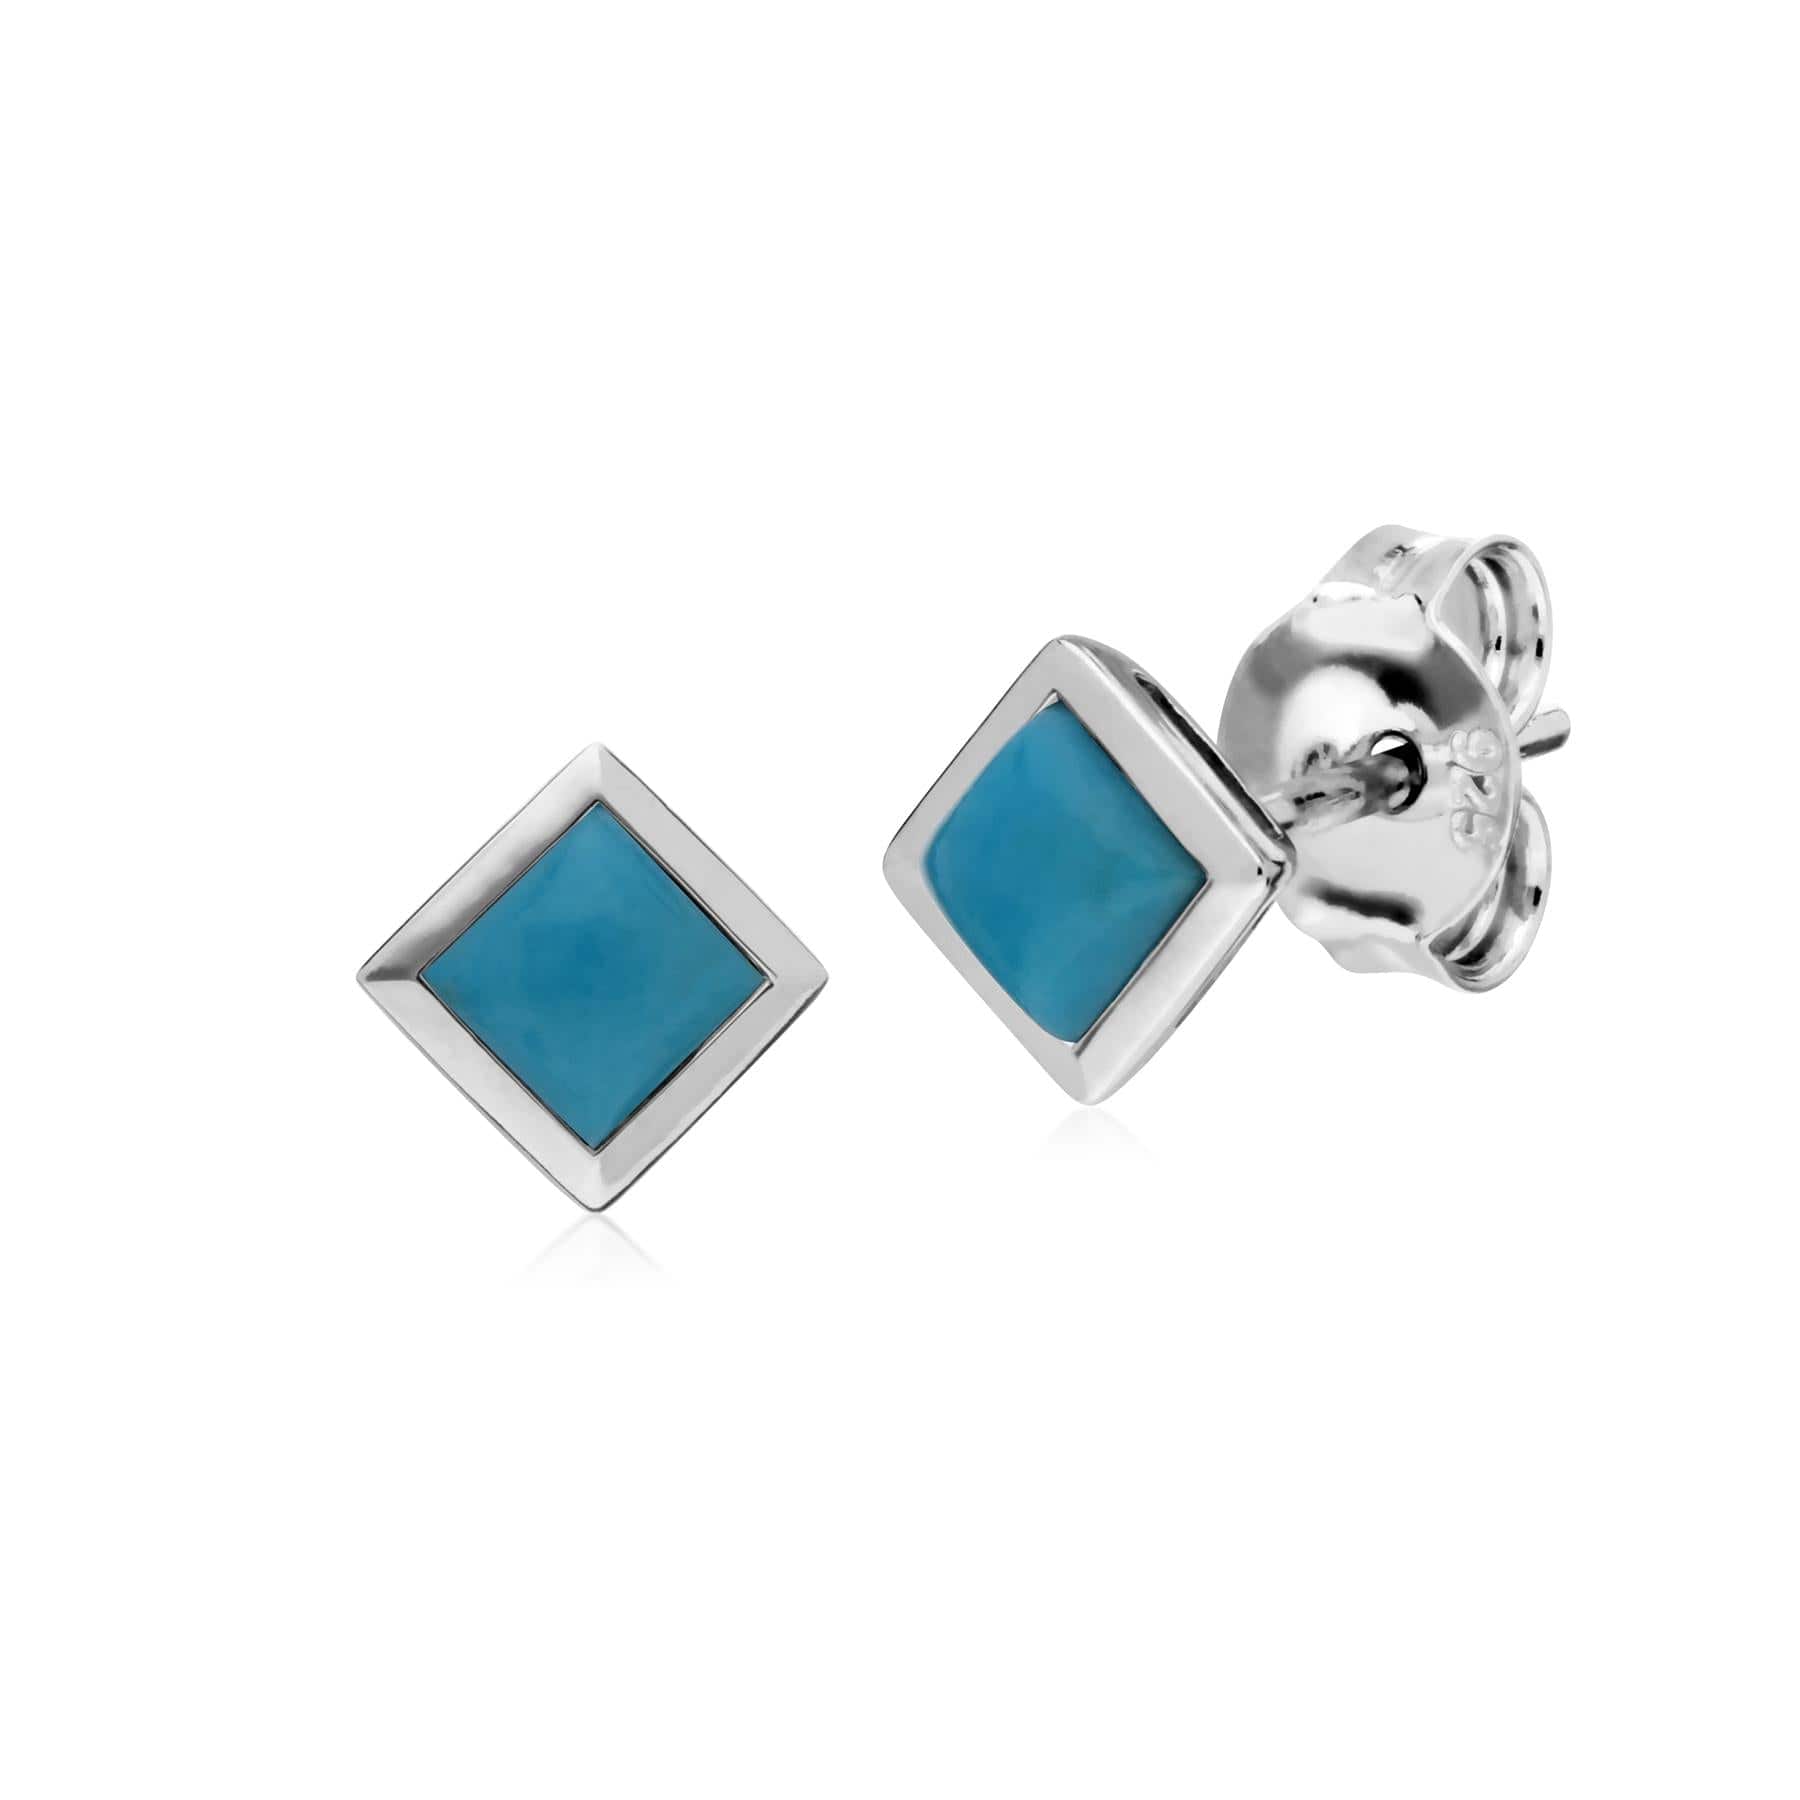 Classic Square Turquoise Bezel Stud Earrings in 925 Sterling Silver - Gemondo